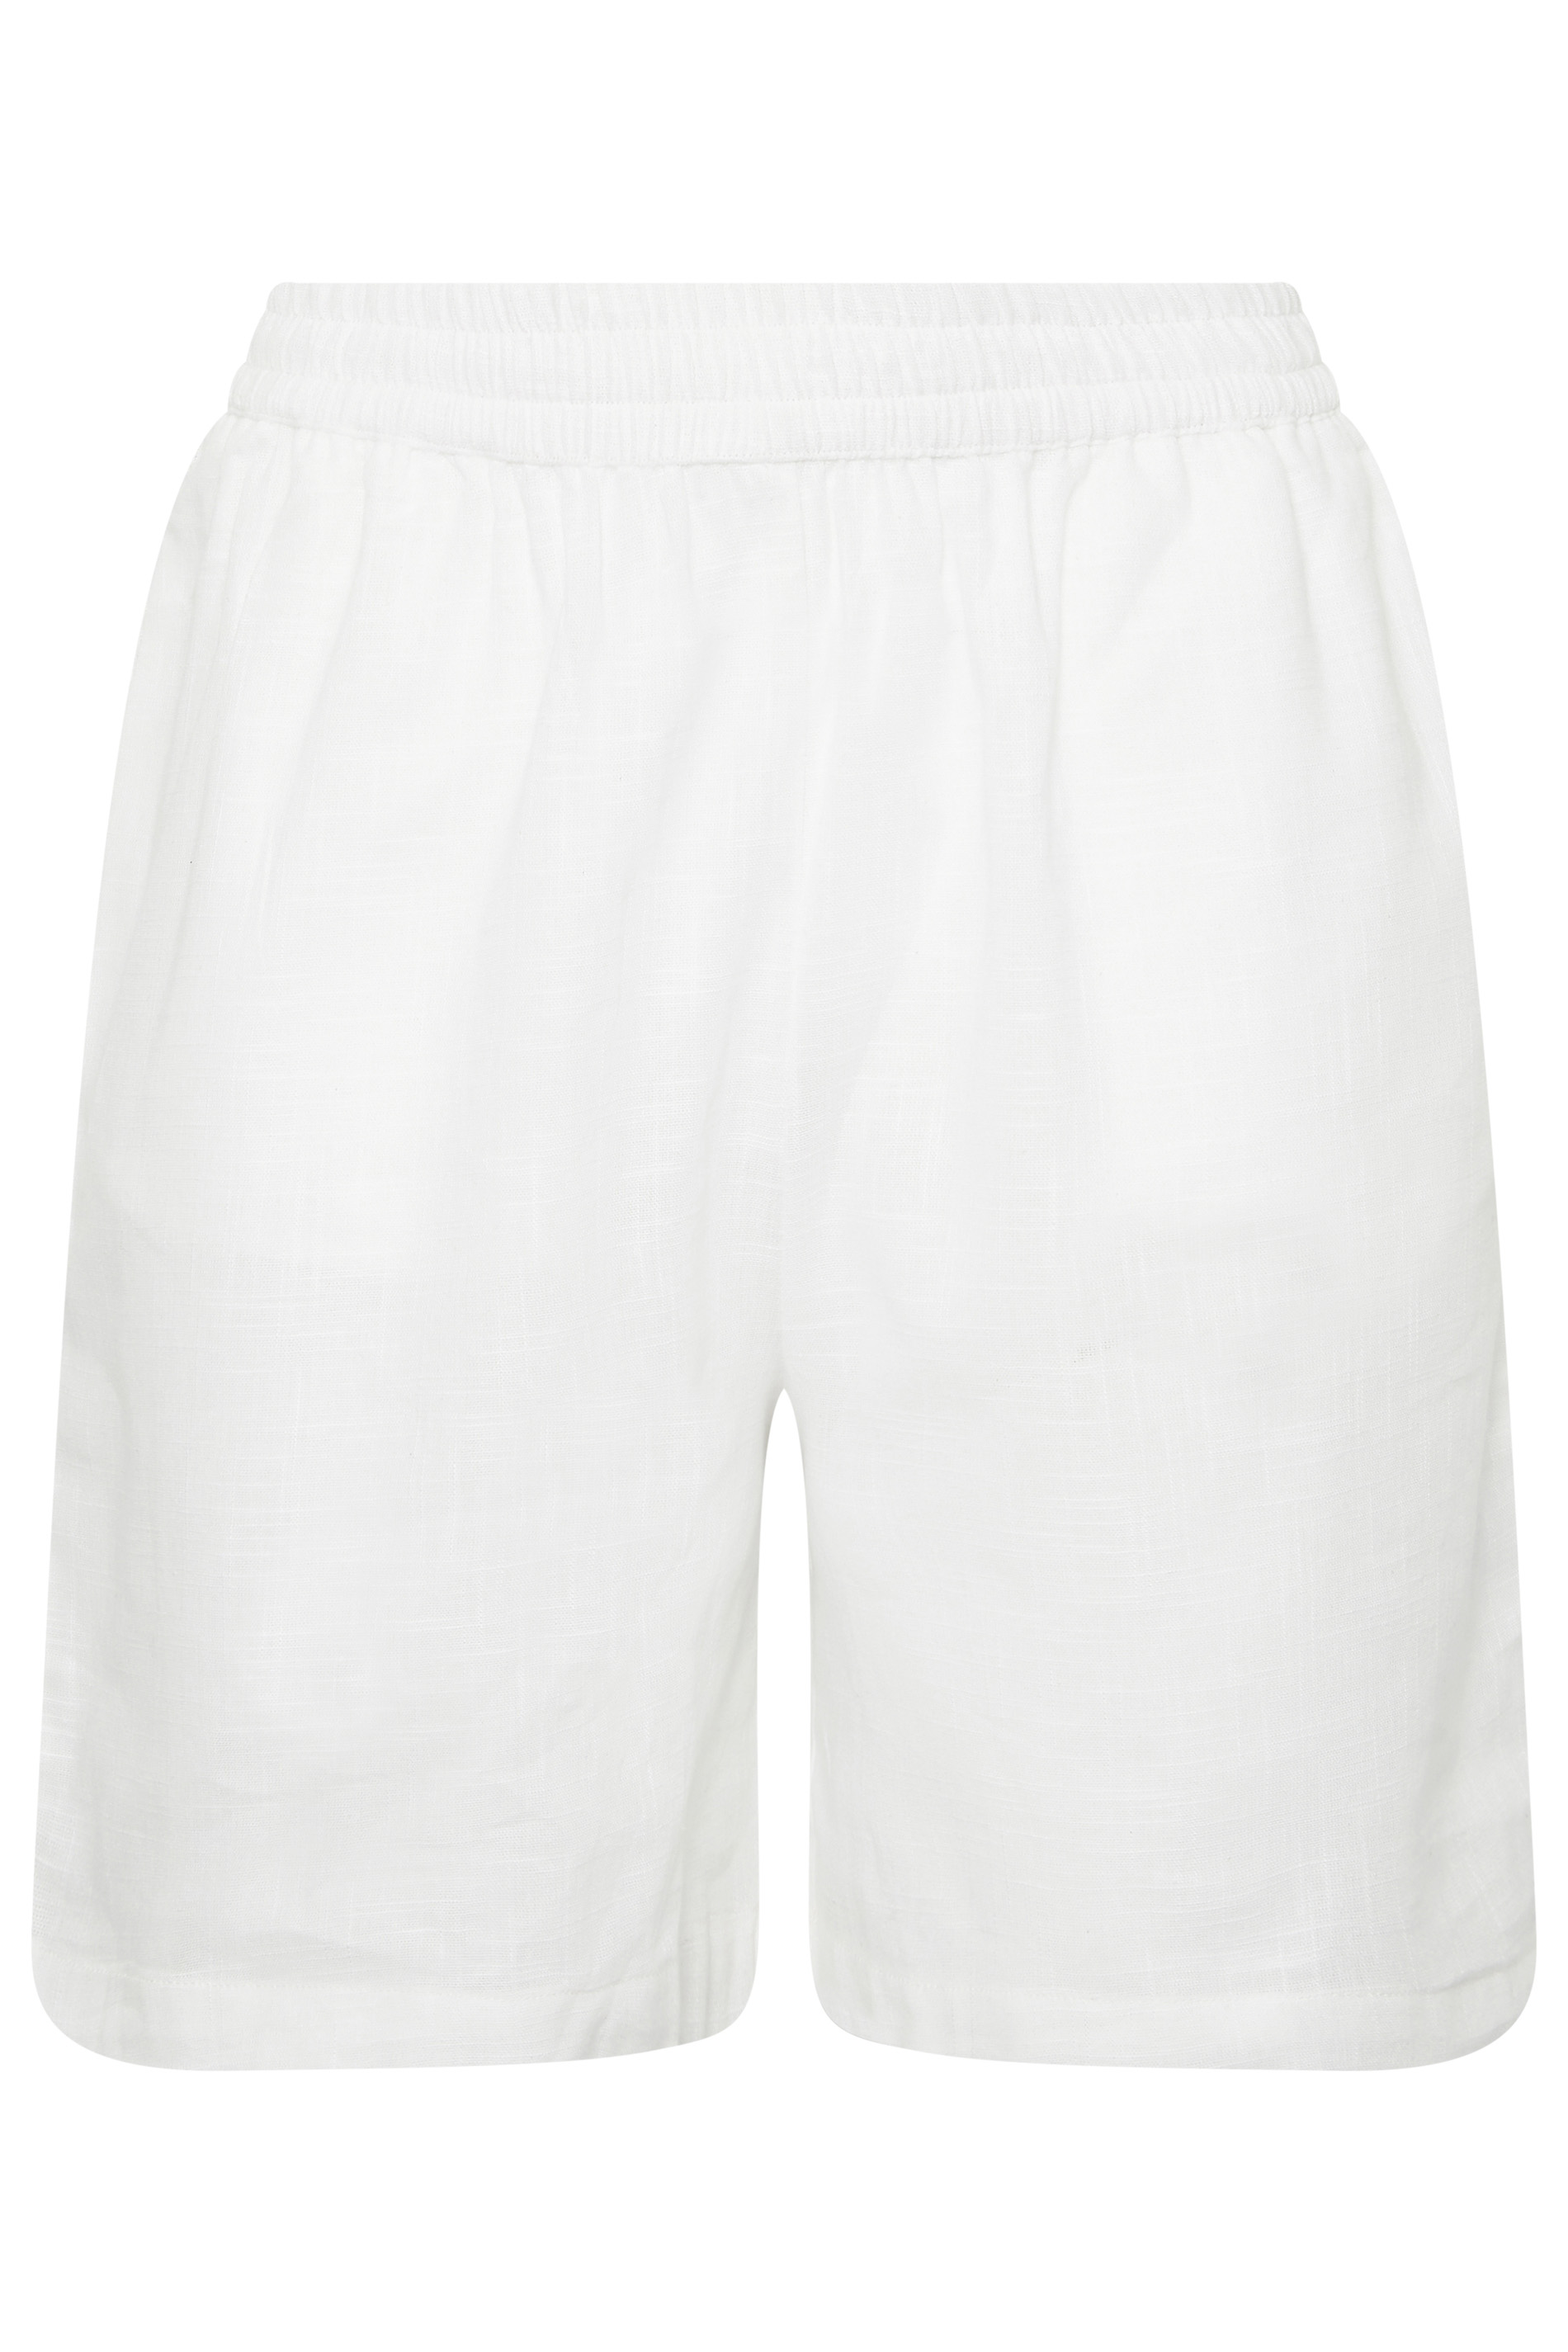 LTS Tall Women's White Cotton Shorts | Long Tall Sally